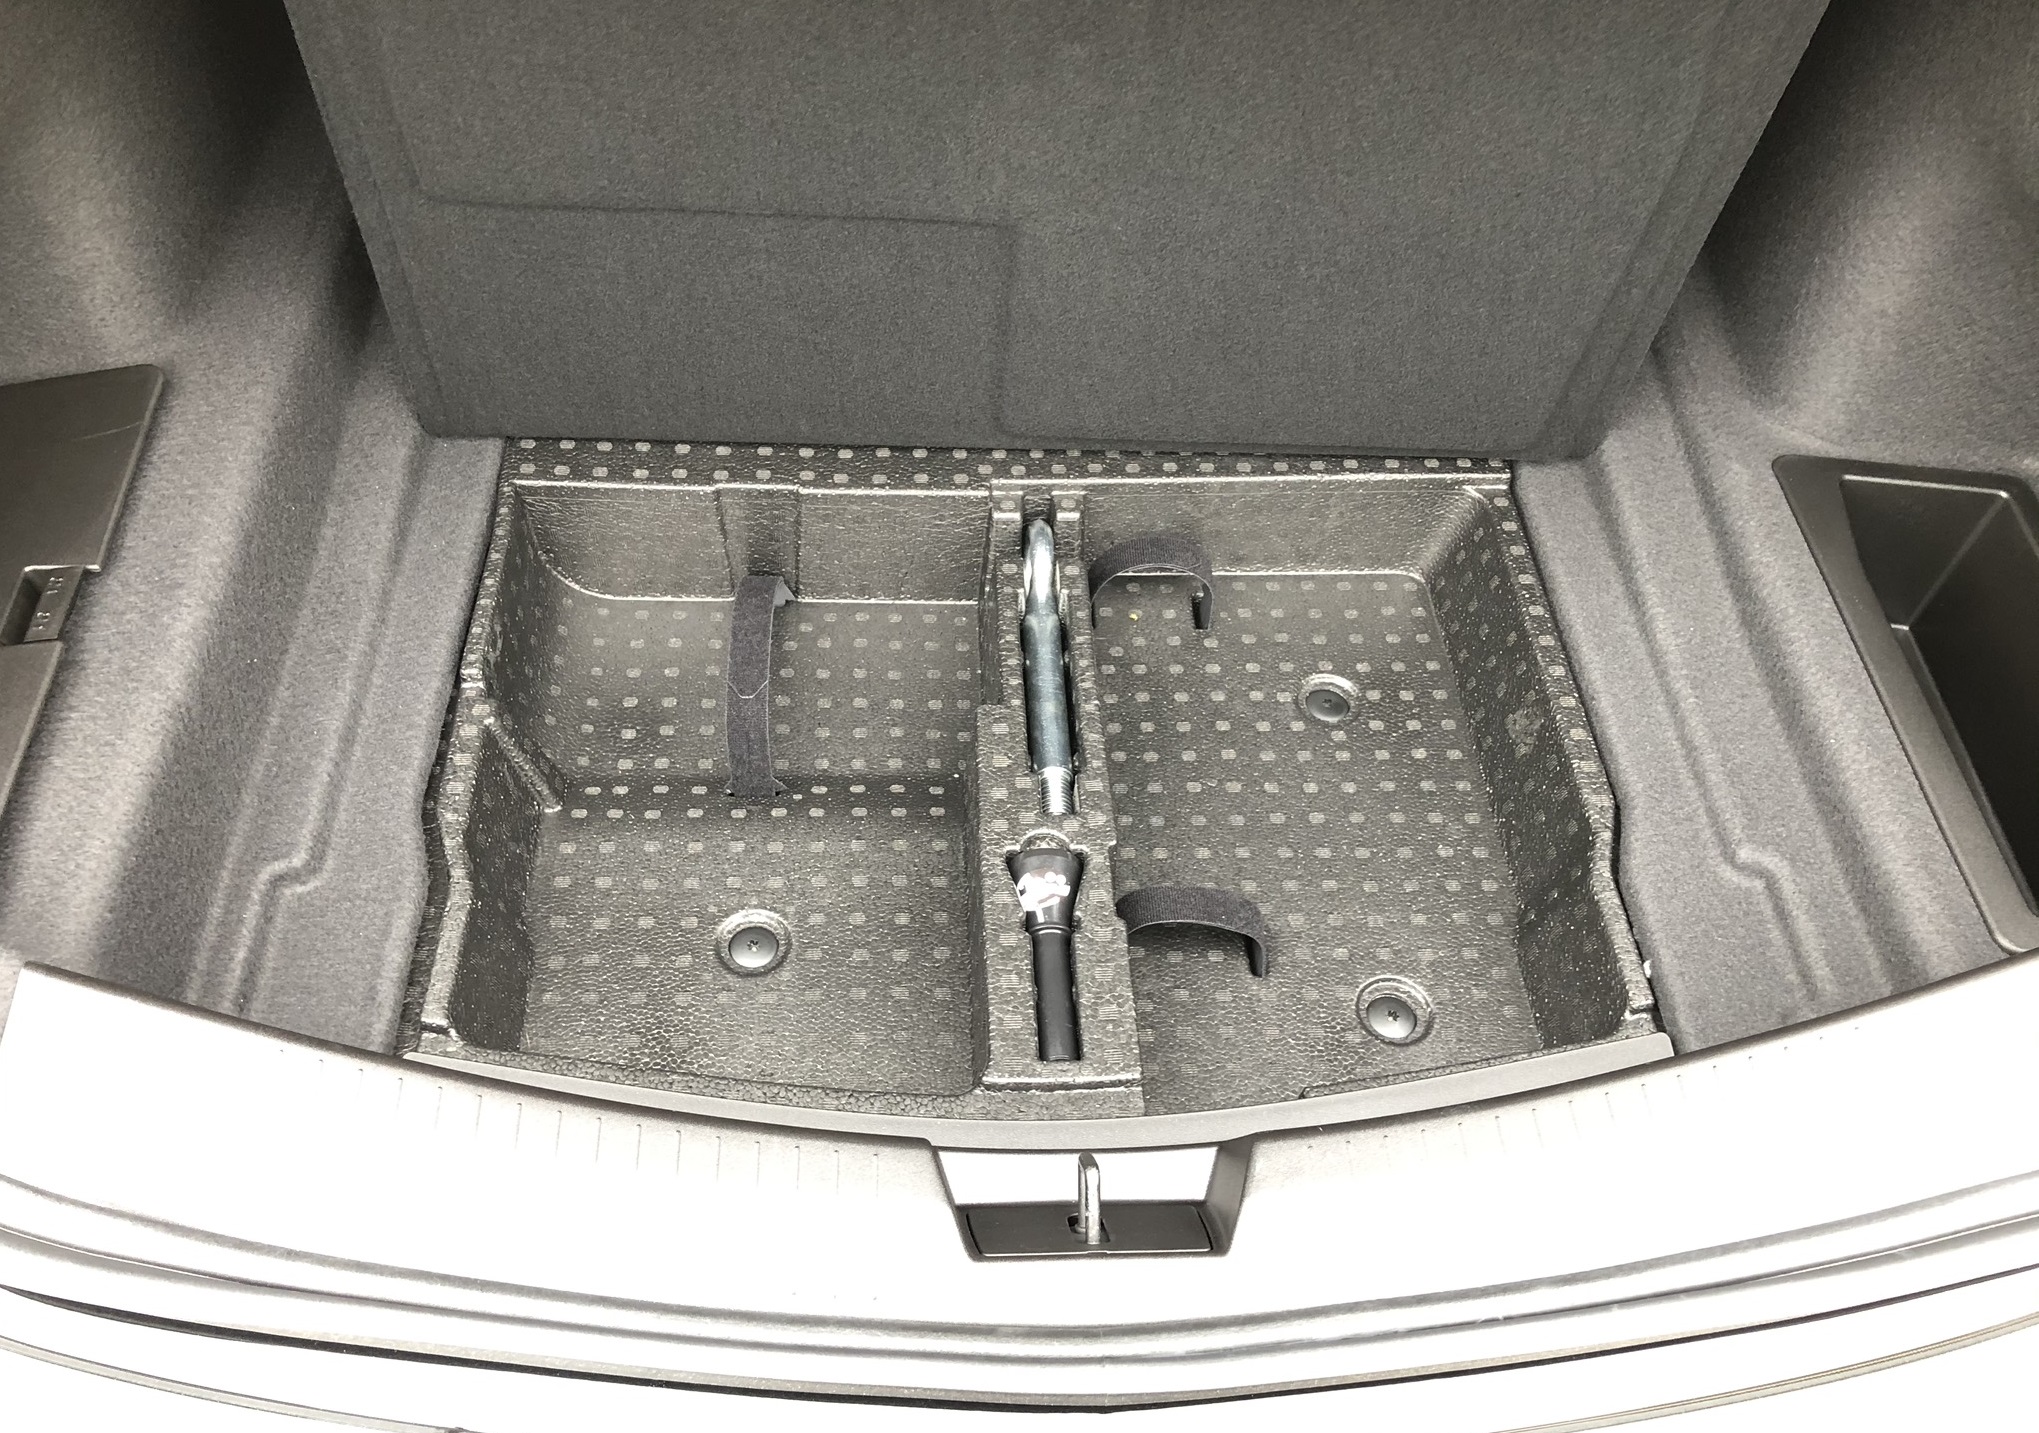 The underfloor storage of the trunk.